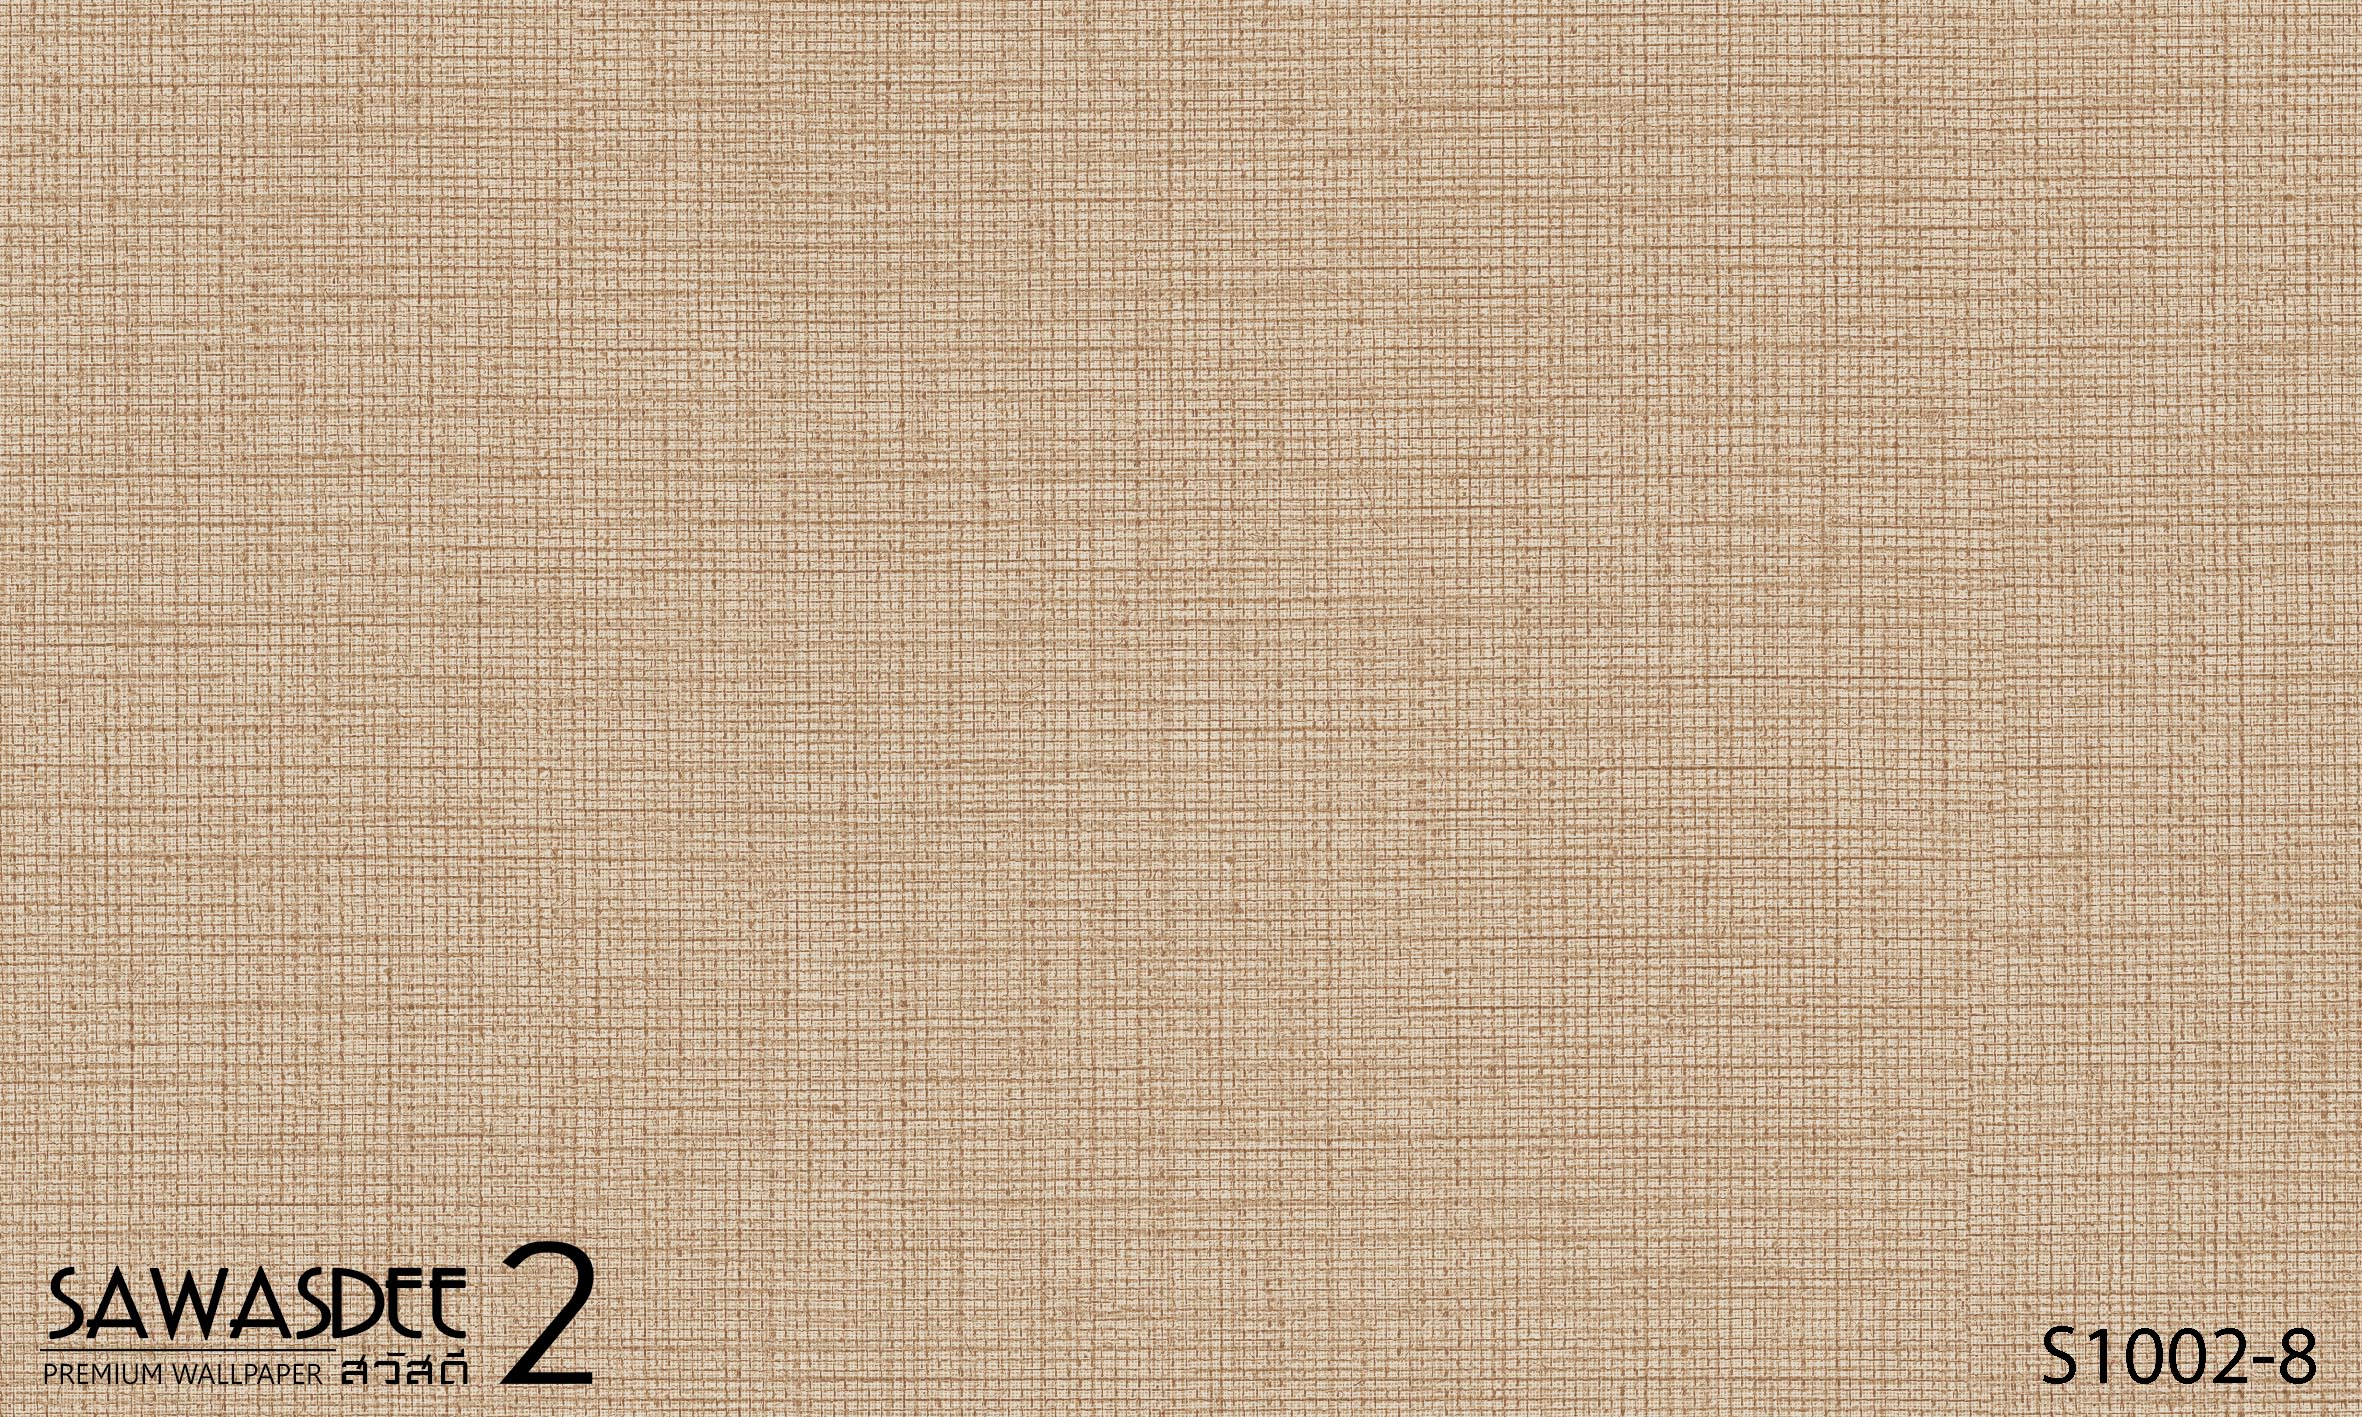 Wallpaper (SAWASDEE 2) S1002-8